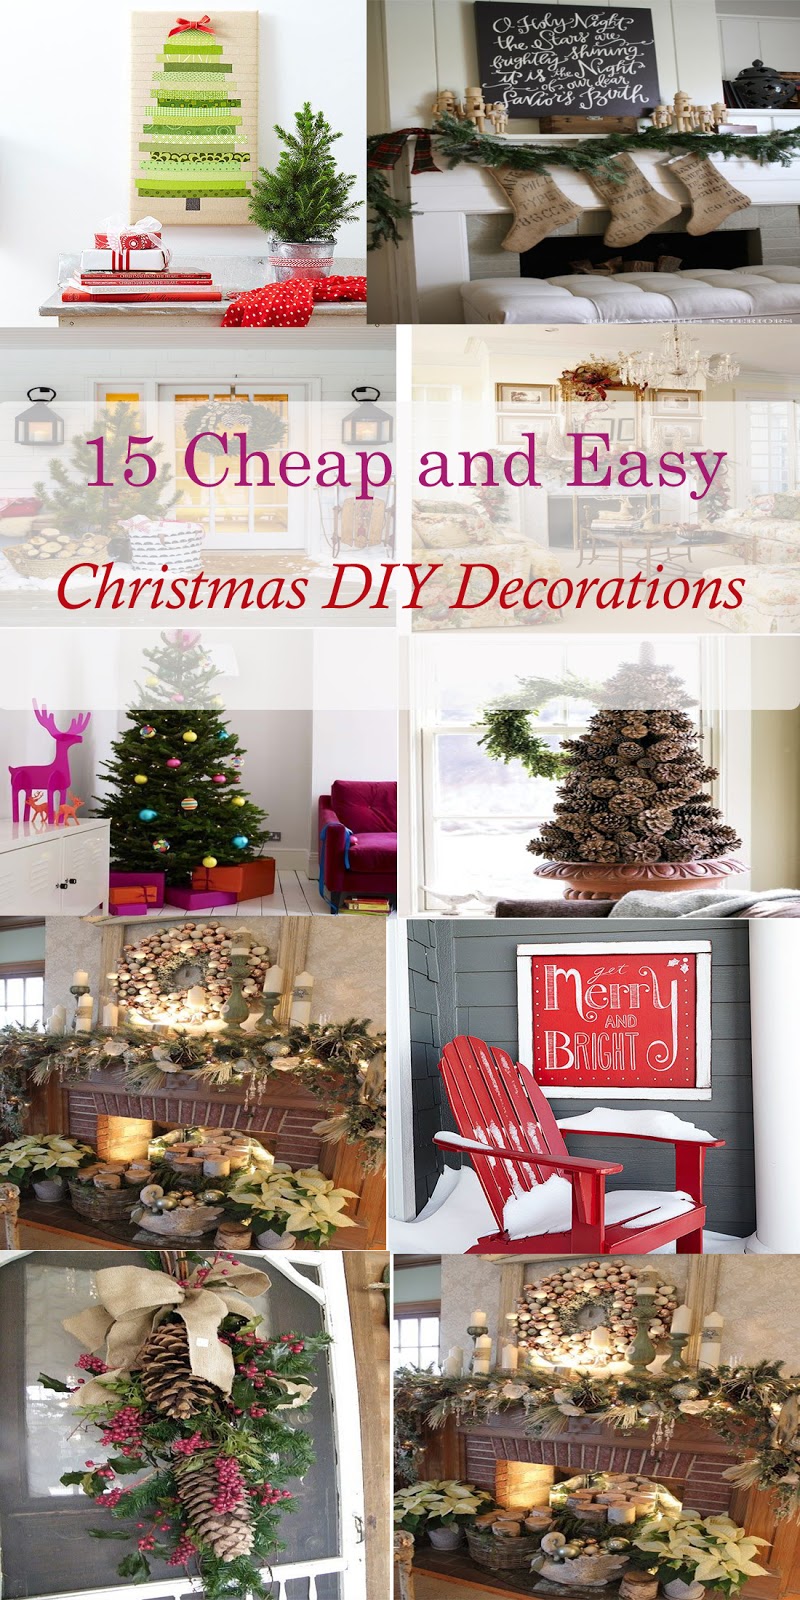  Christmas  Stuff 15 Cheap and Easy Christmas  DIY Decorations 